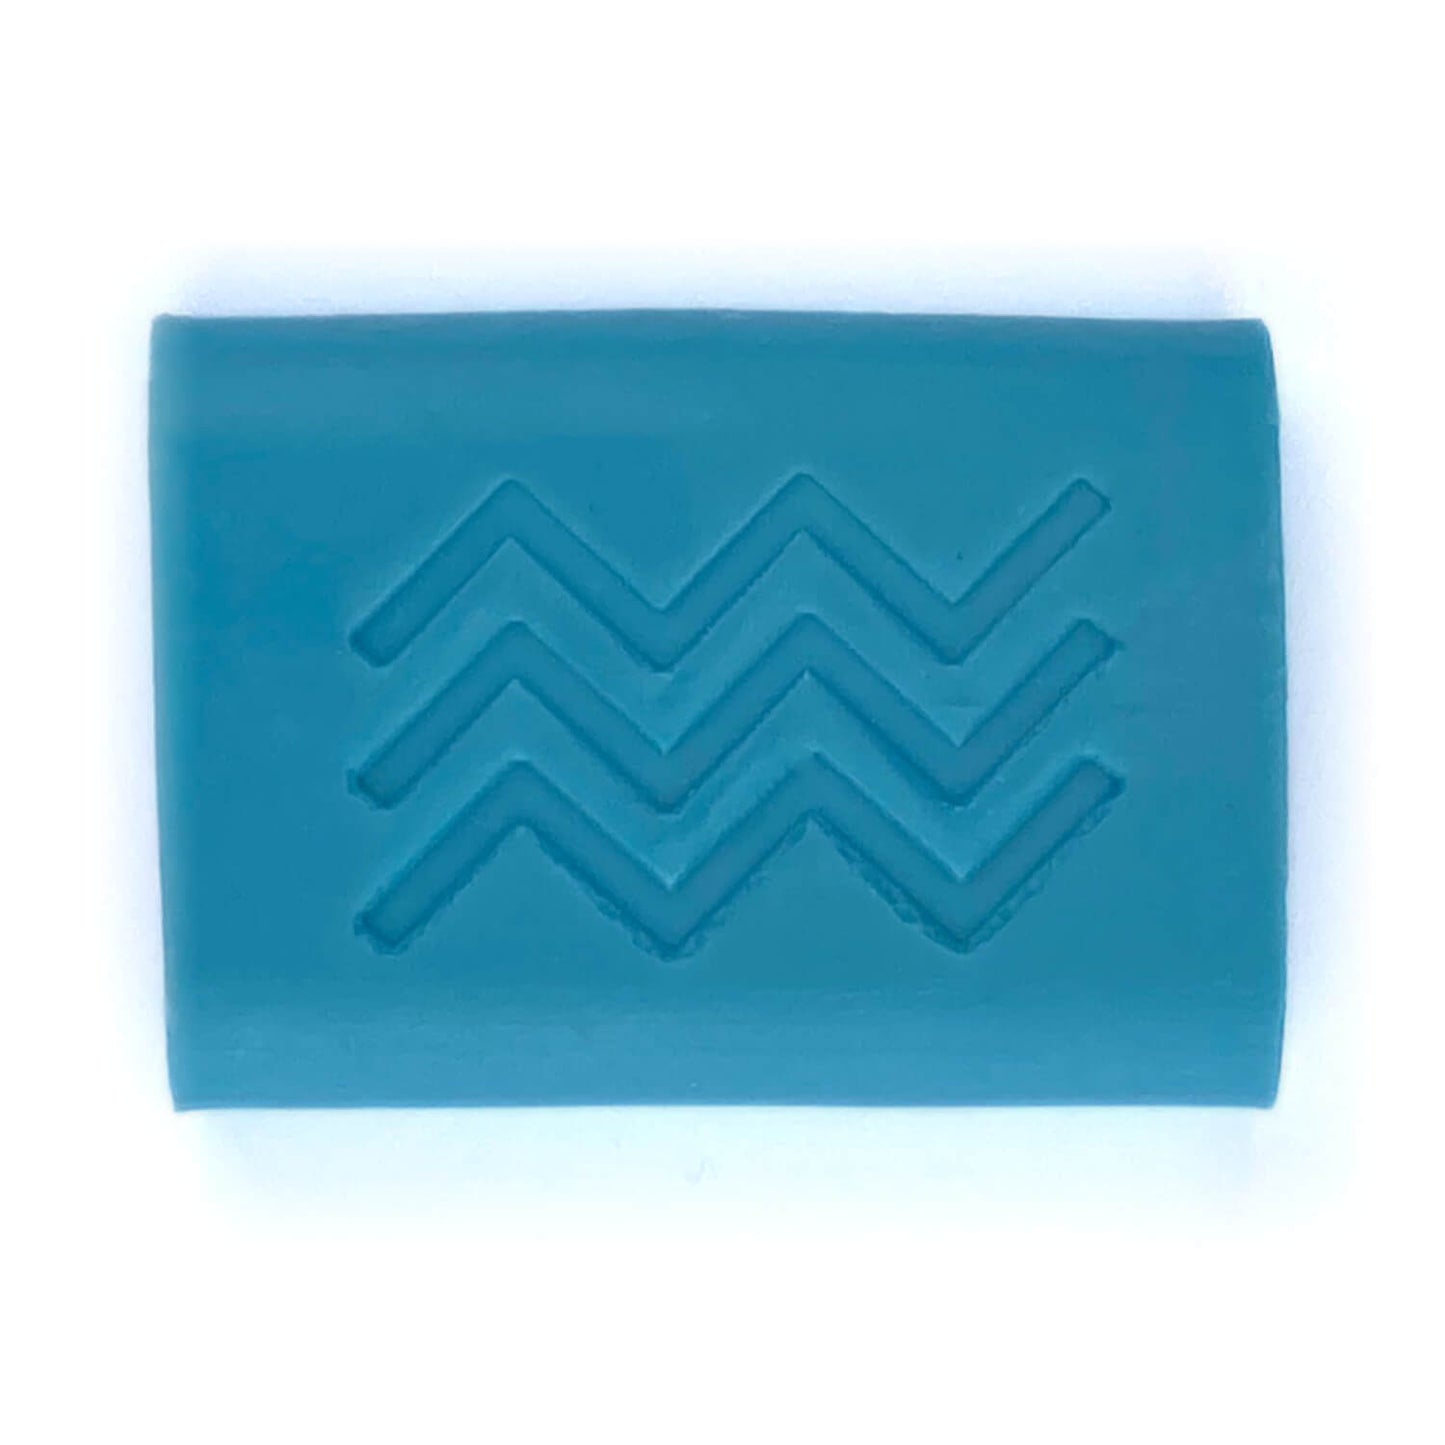 'Pacific Ocean Blue' Soap Bar